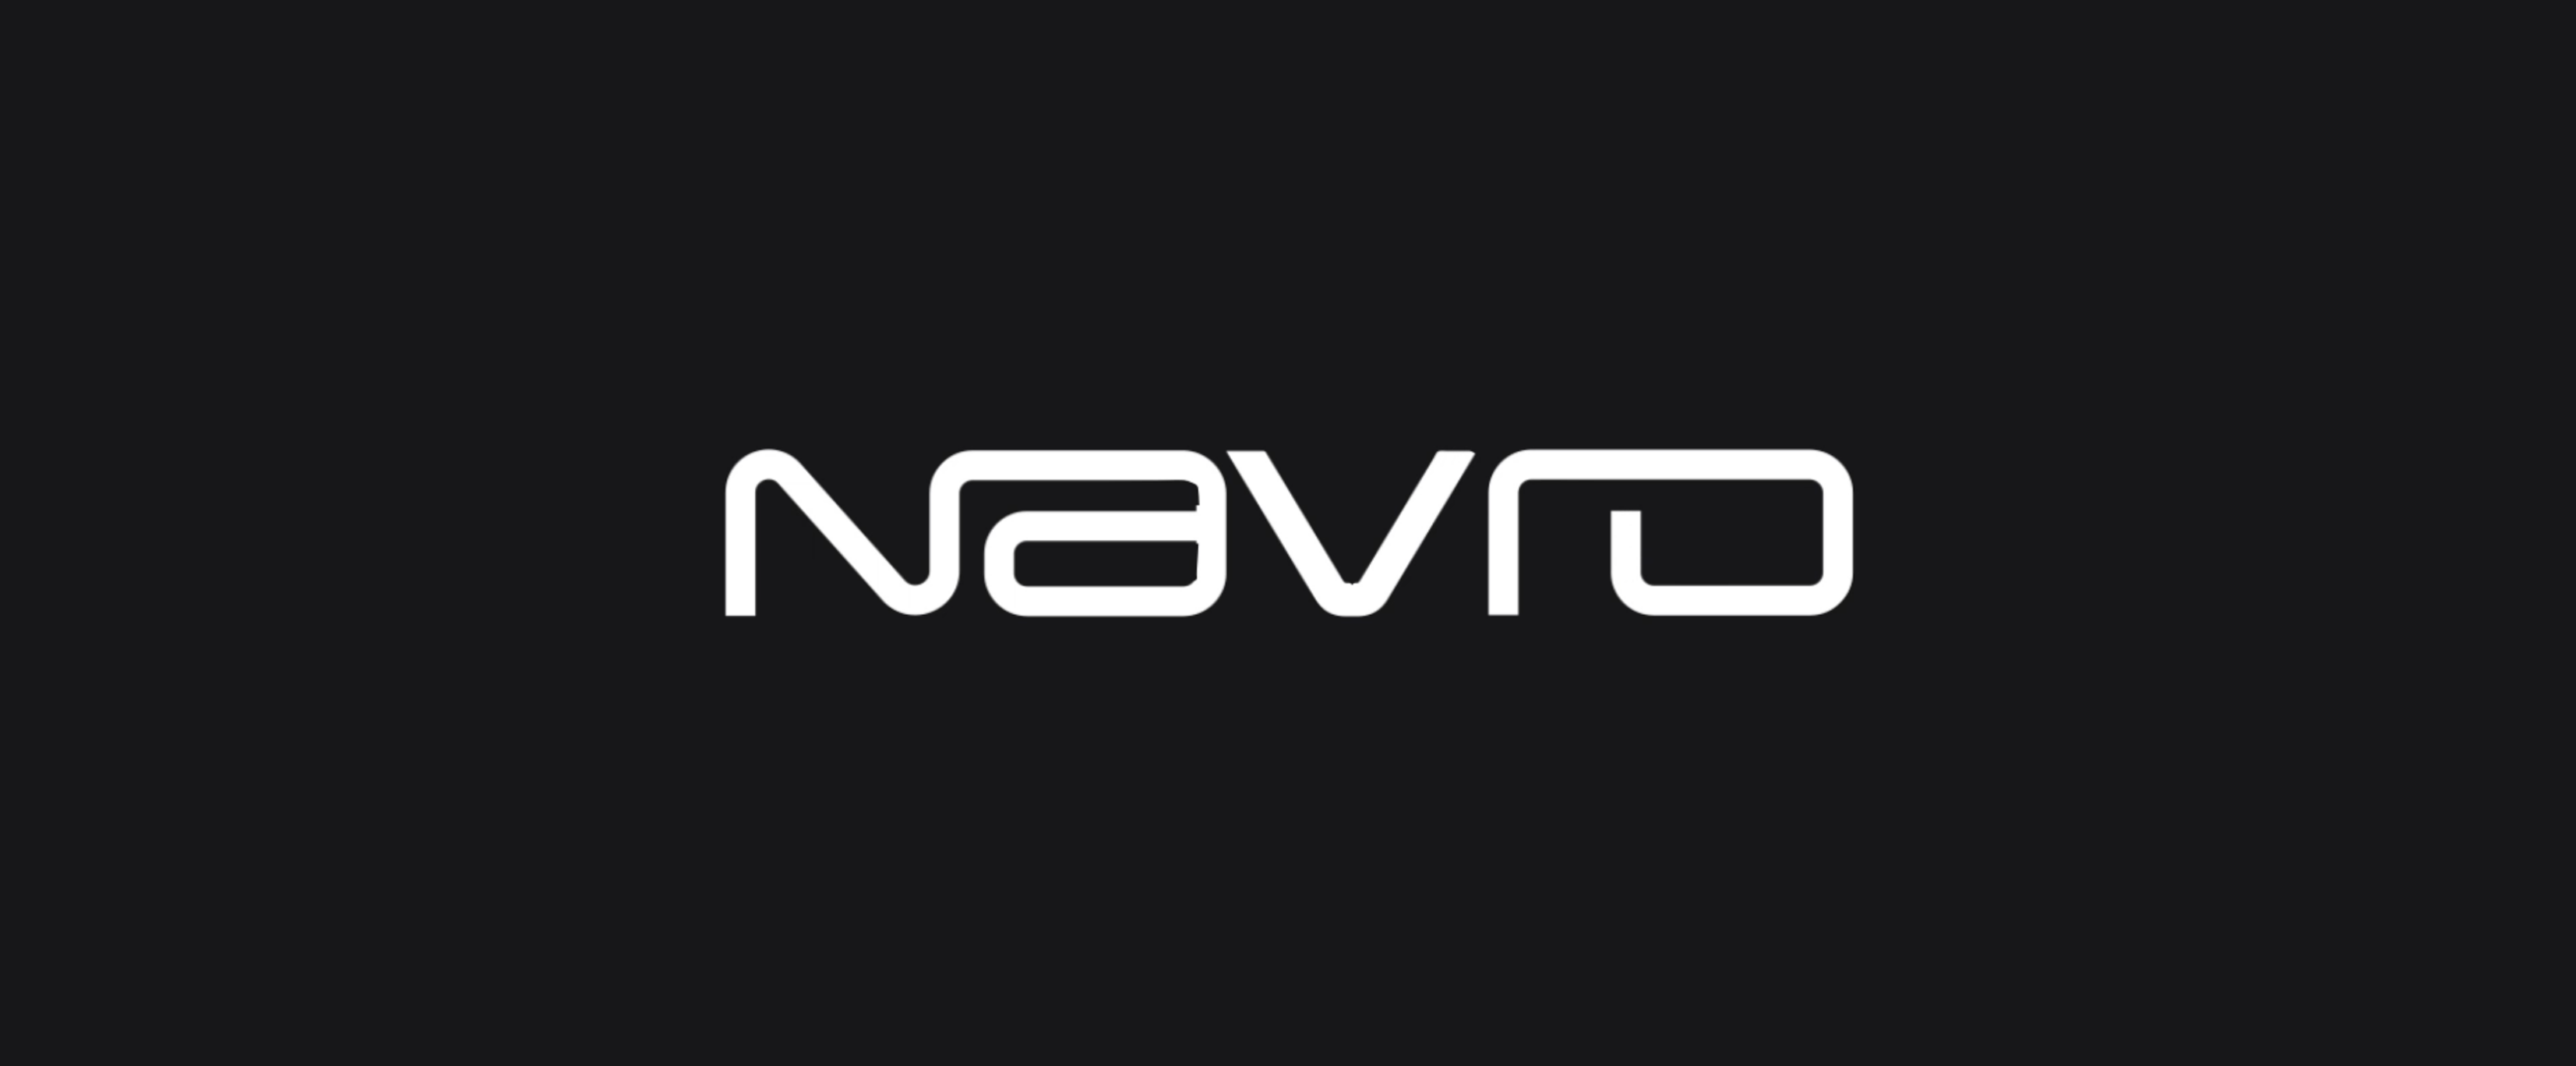 Navro-Logo-2610x1080